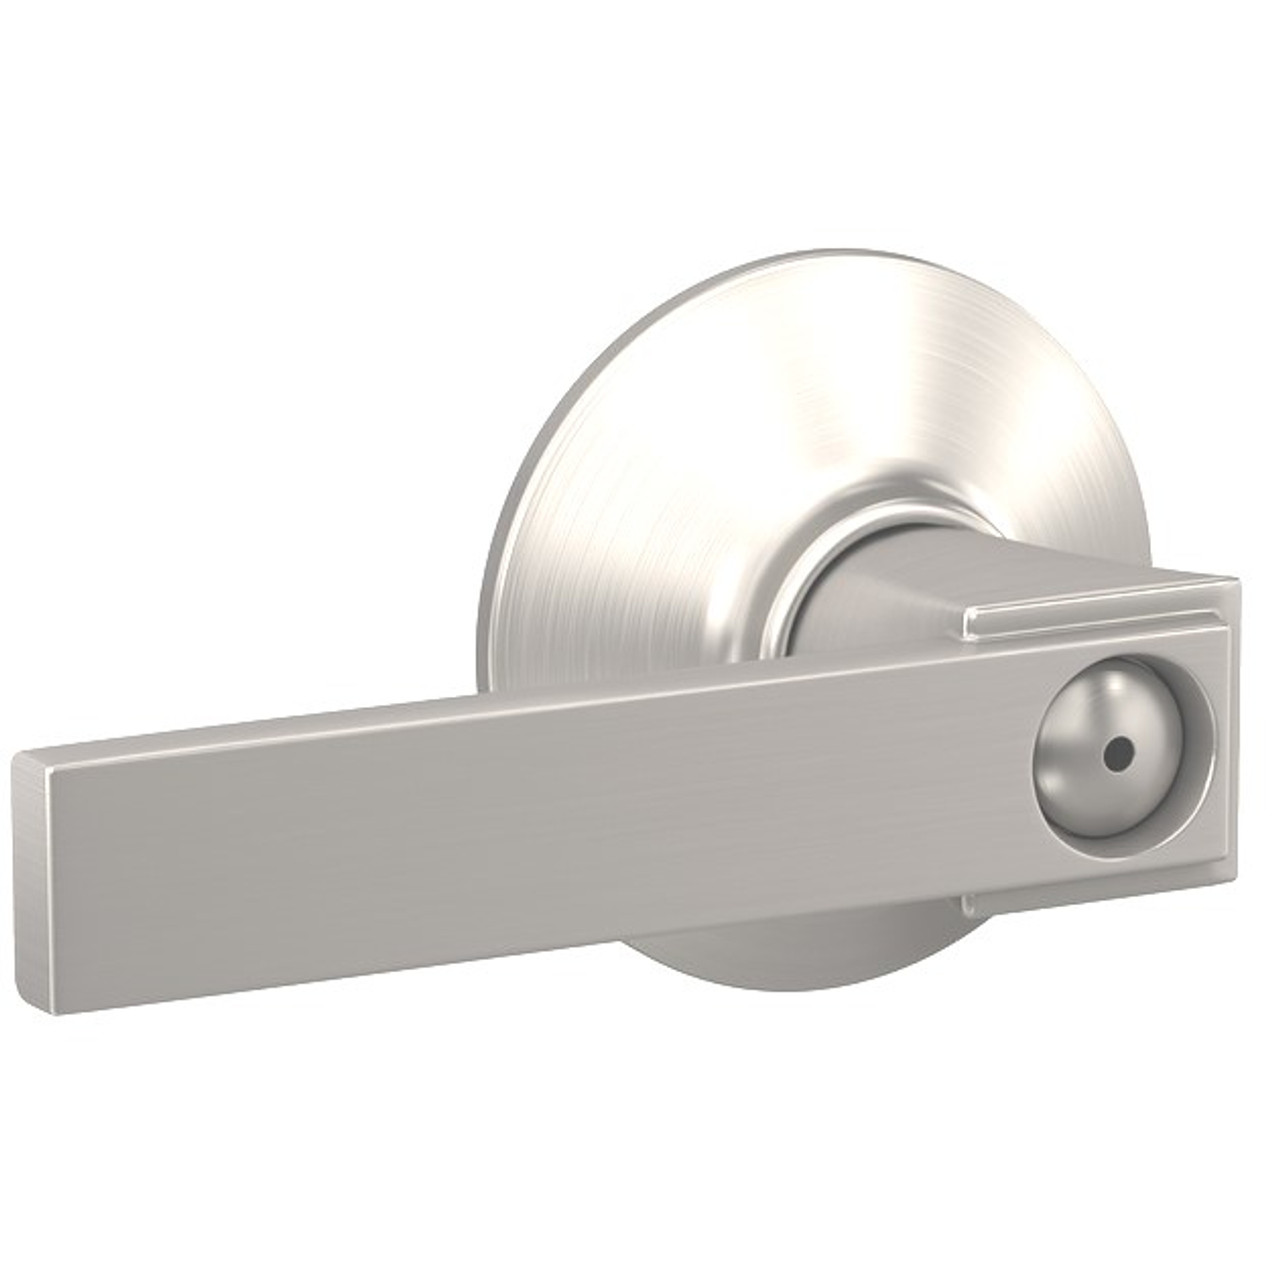 Schlage Privacy Northbrook Lever Door Lock with Standard Trim